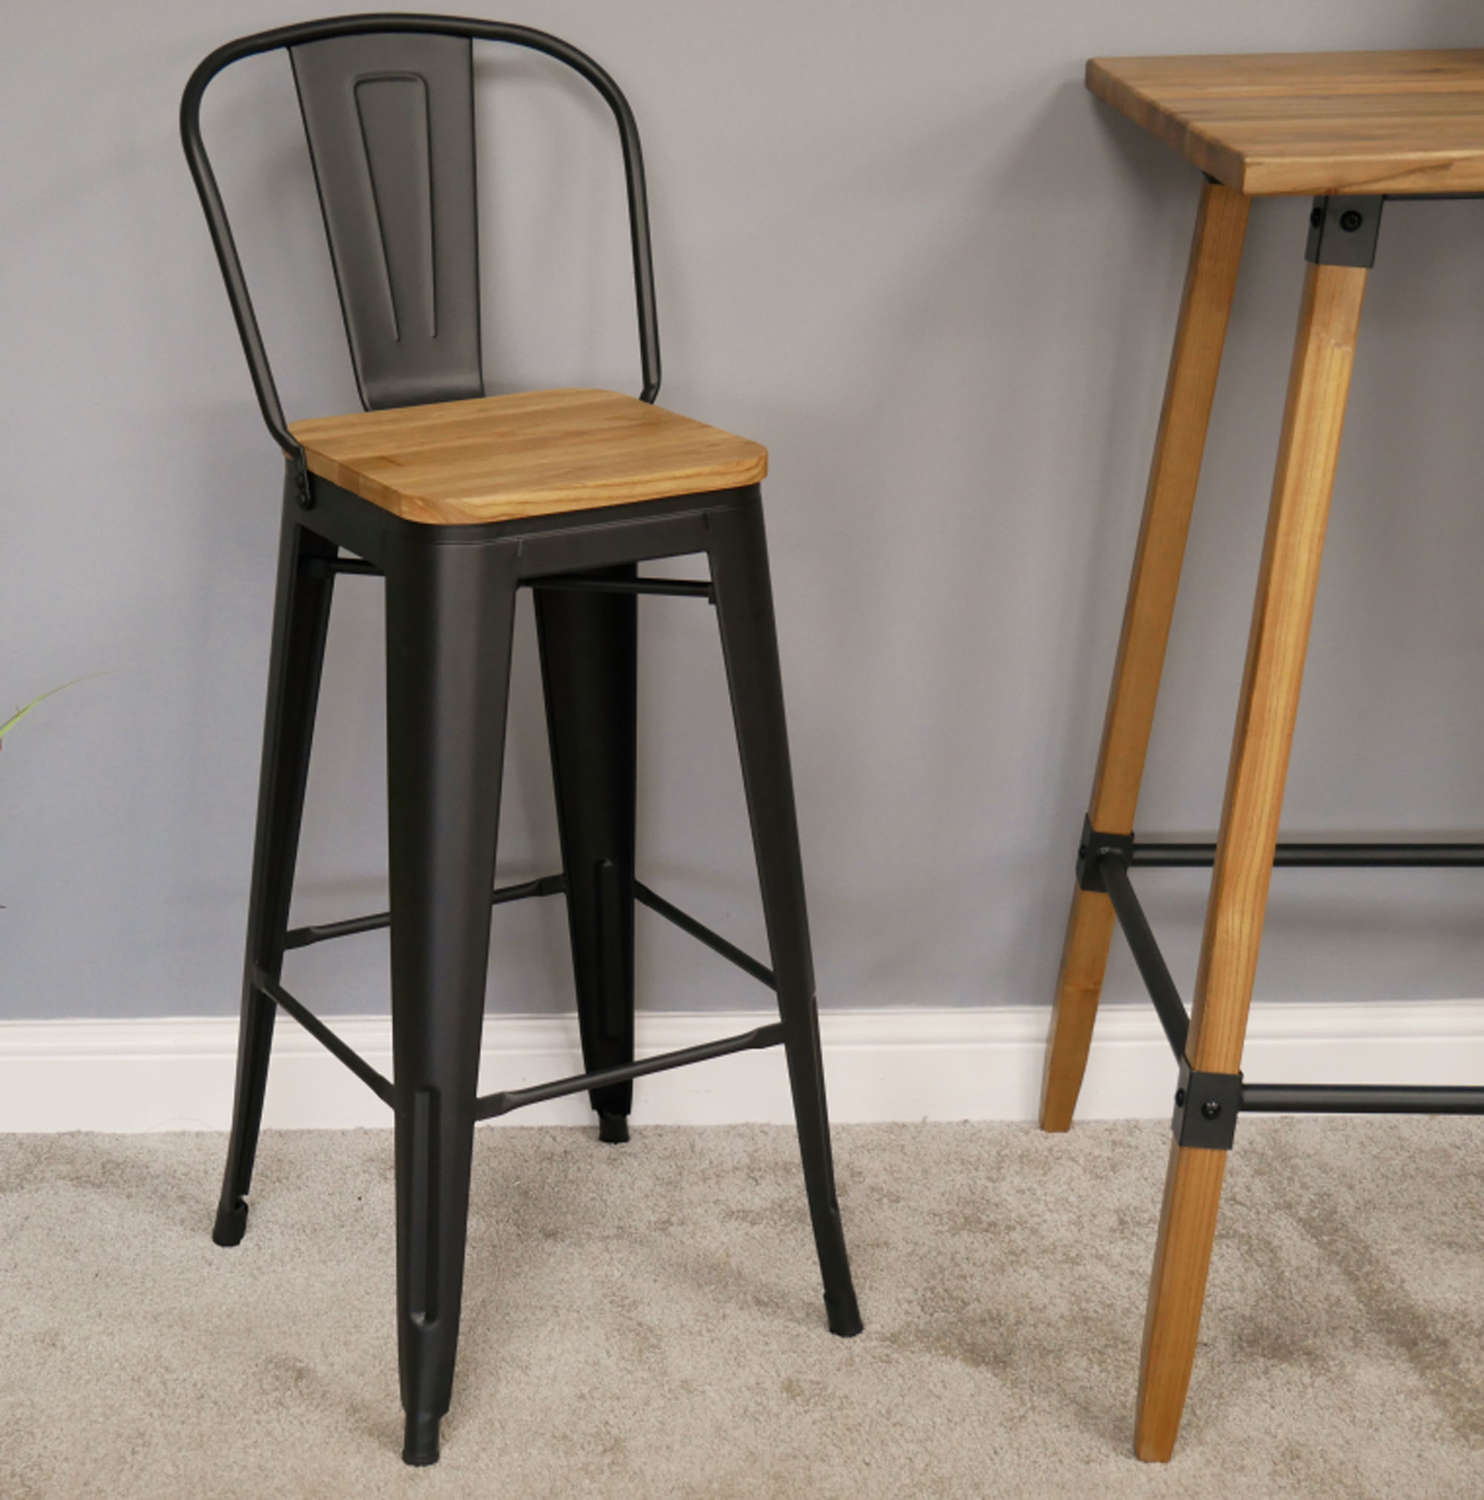 Industrial metal and wood bar stool